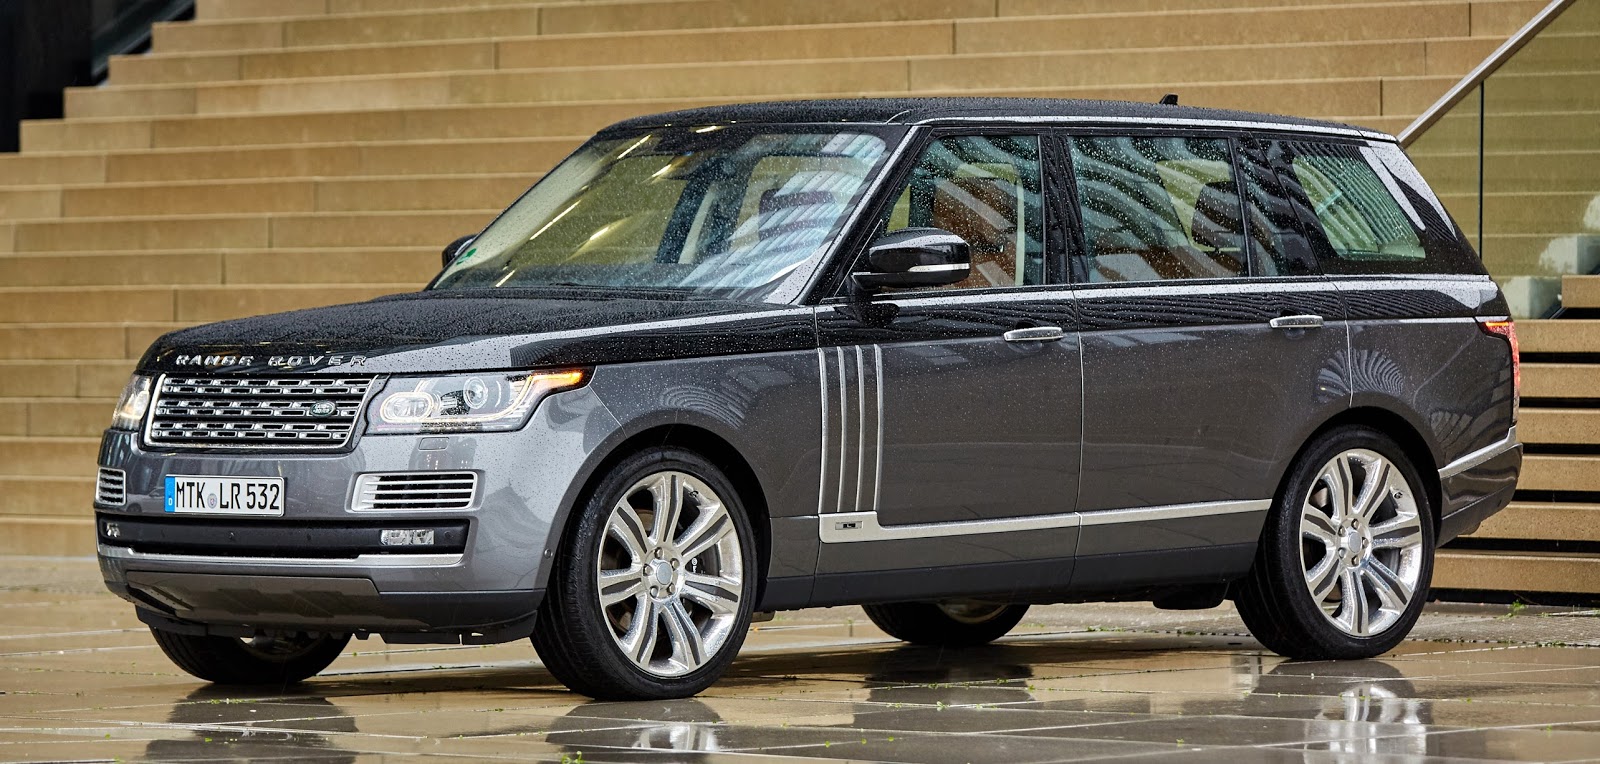 Range Rover SVAutobiography ultrapassa fronteira do R$ 1 milhão